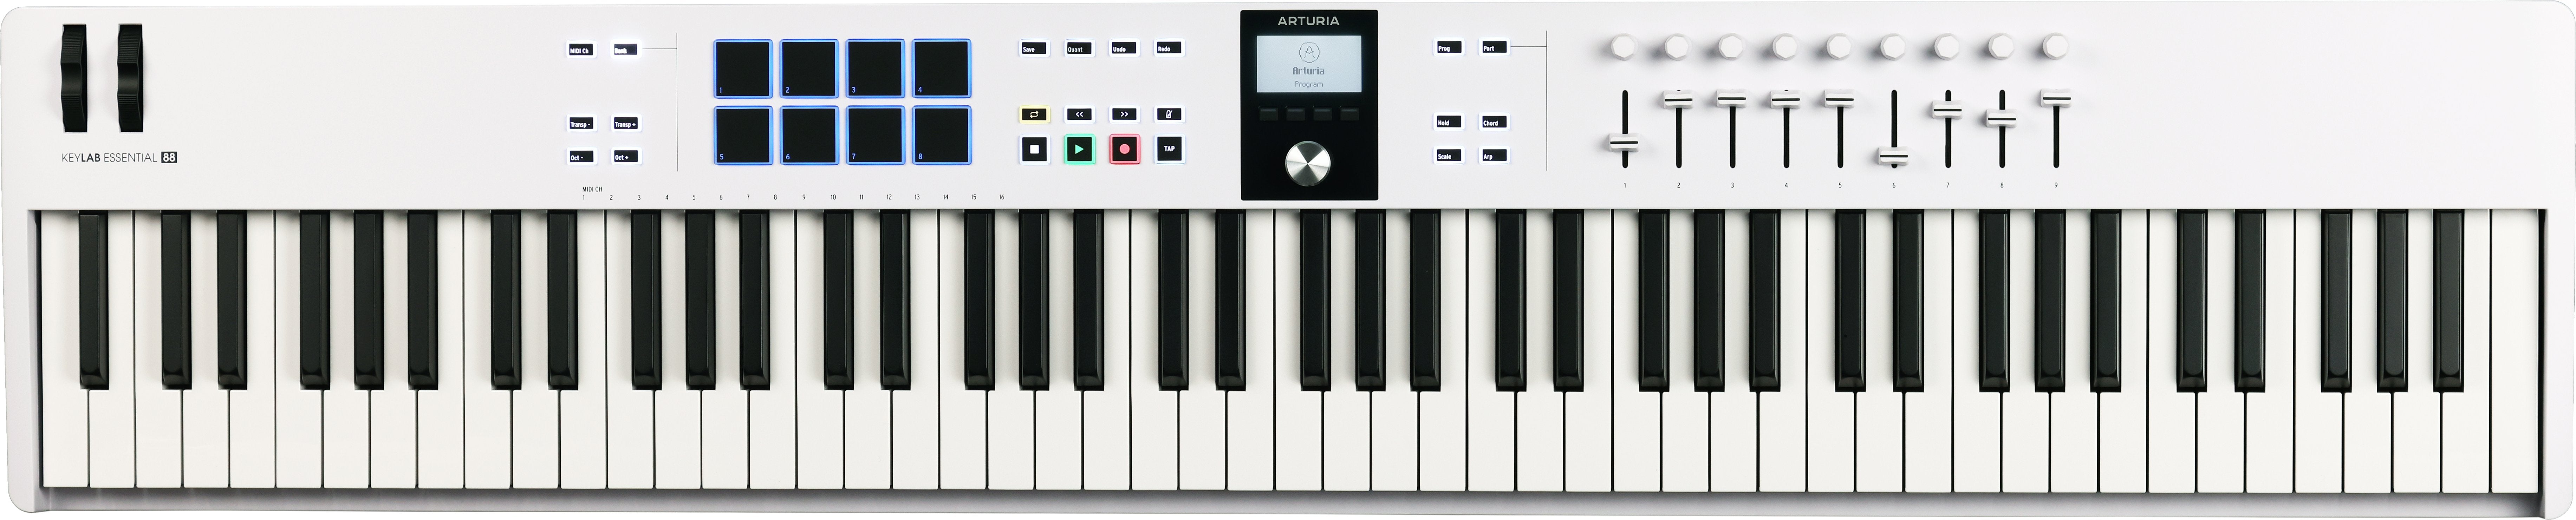 Arturia Keylab Essential 88 MK3 Universal MIDI Controller Keyboard, White